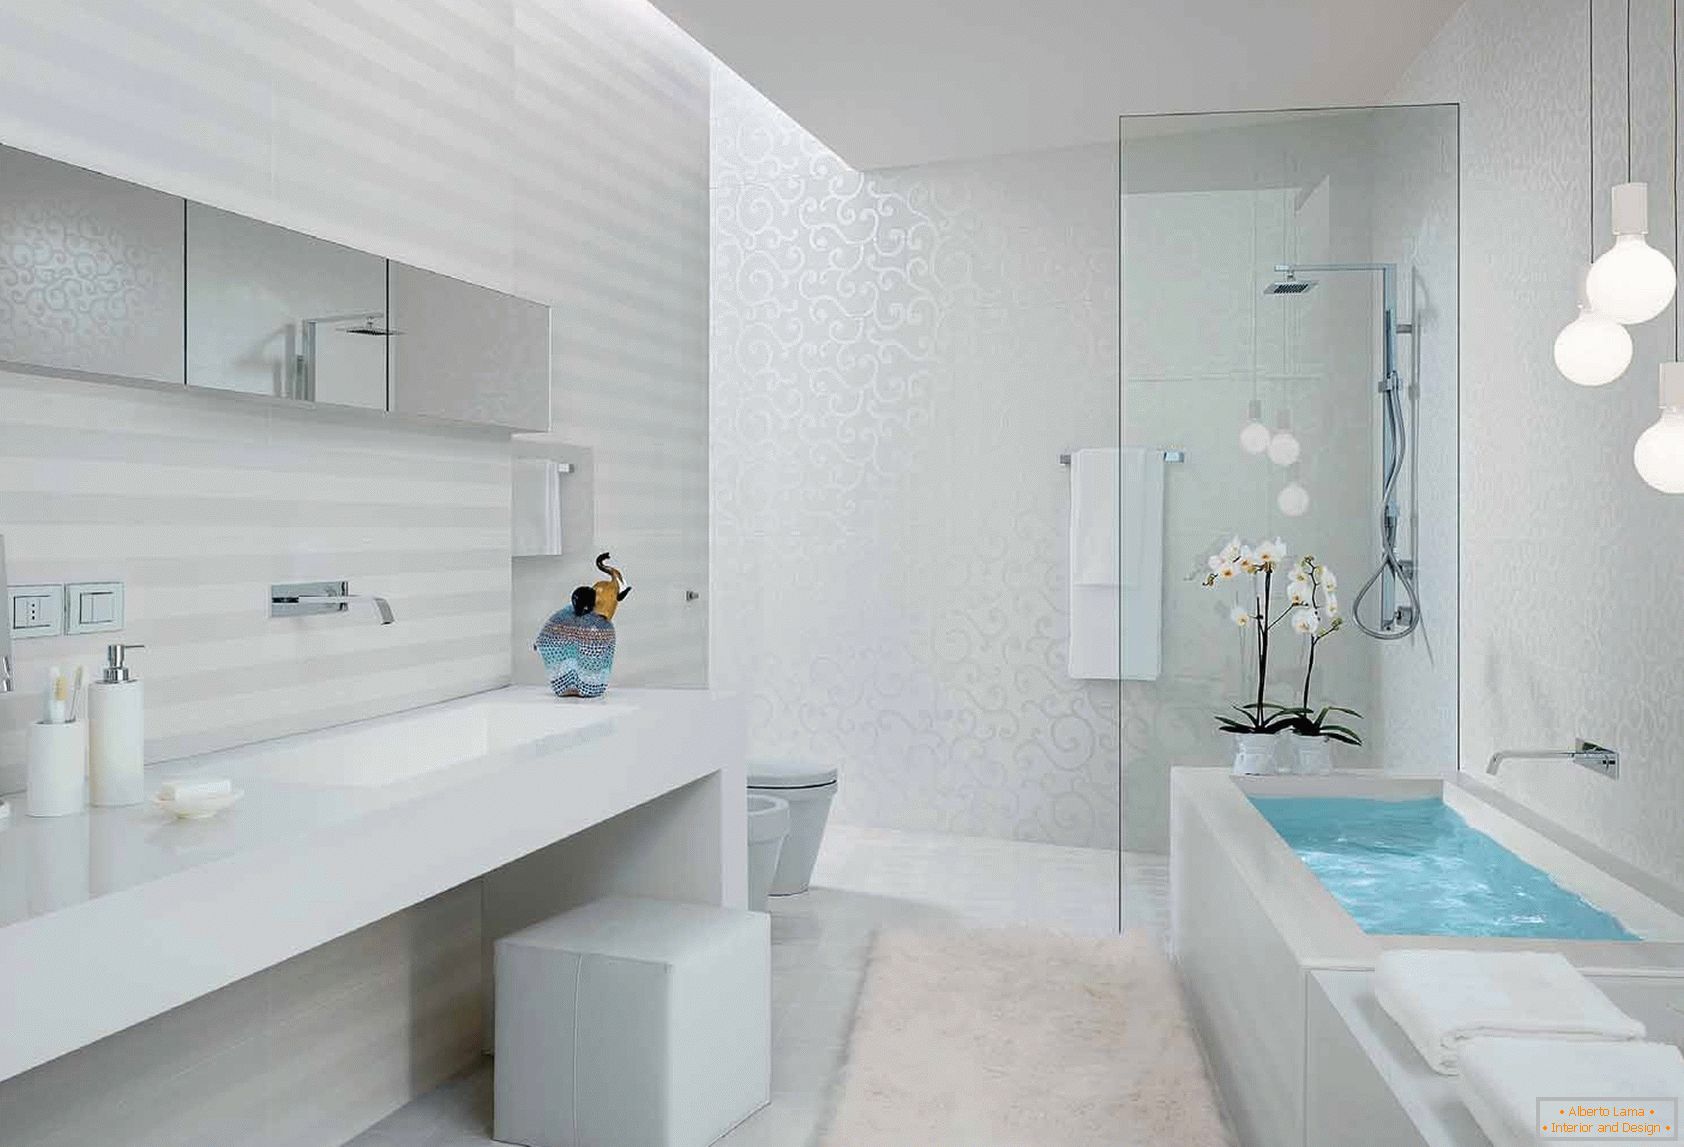 Bathroom with white floors